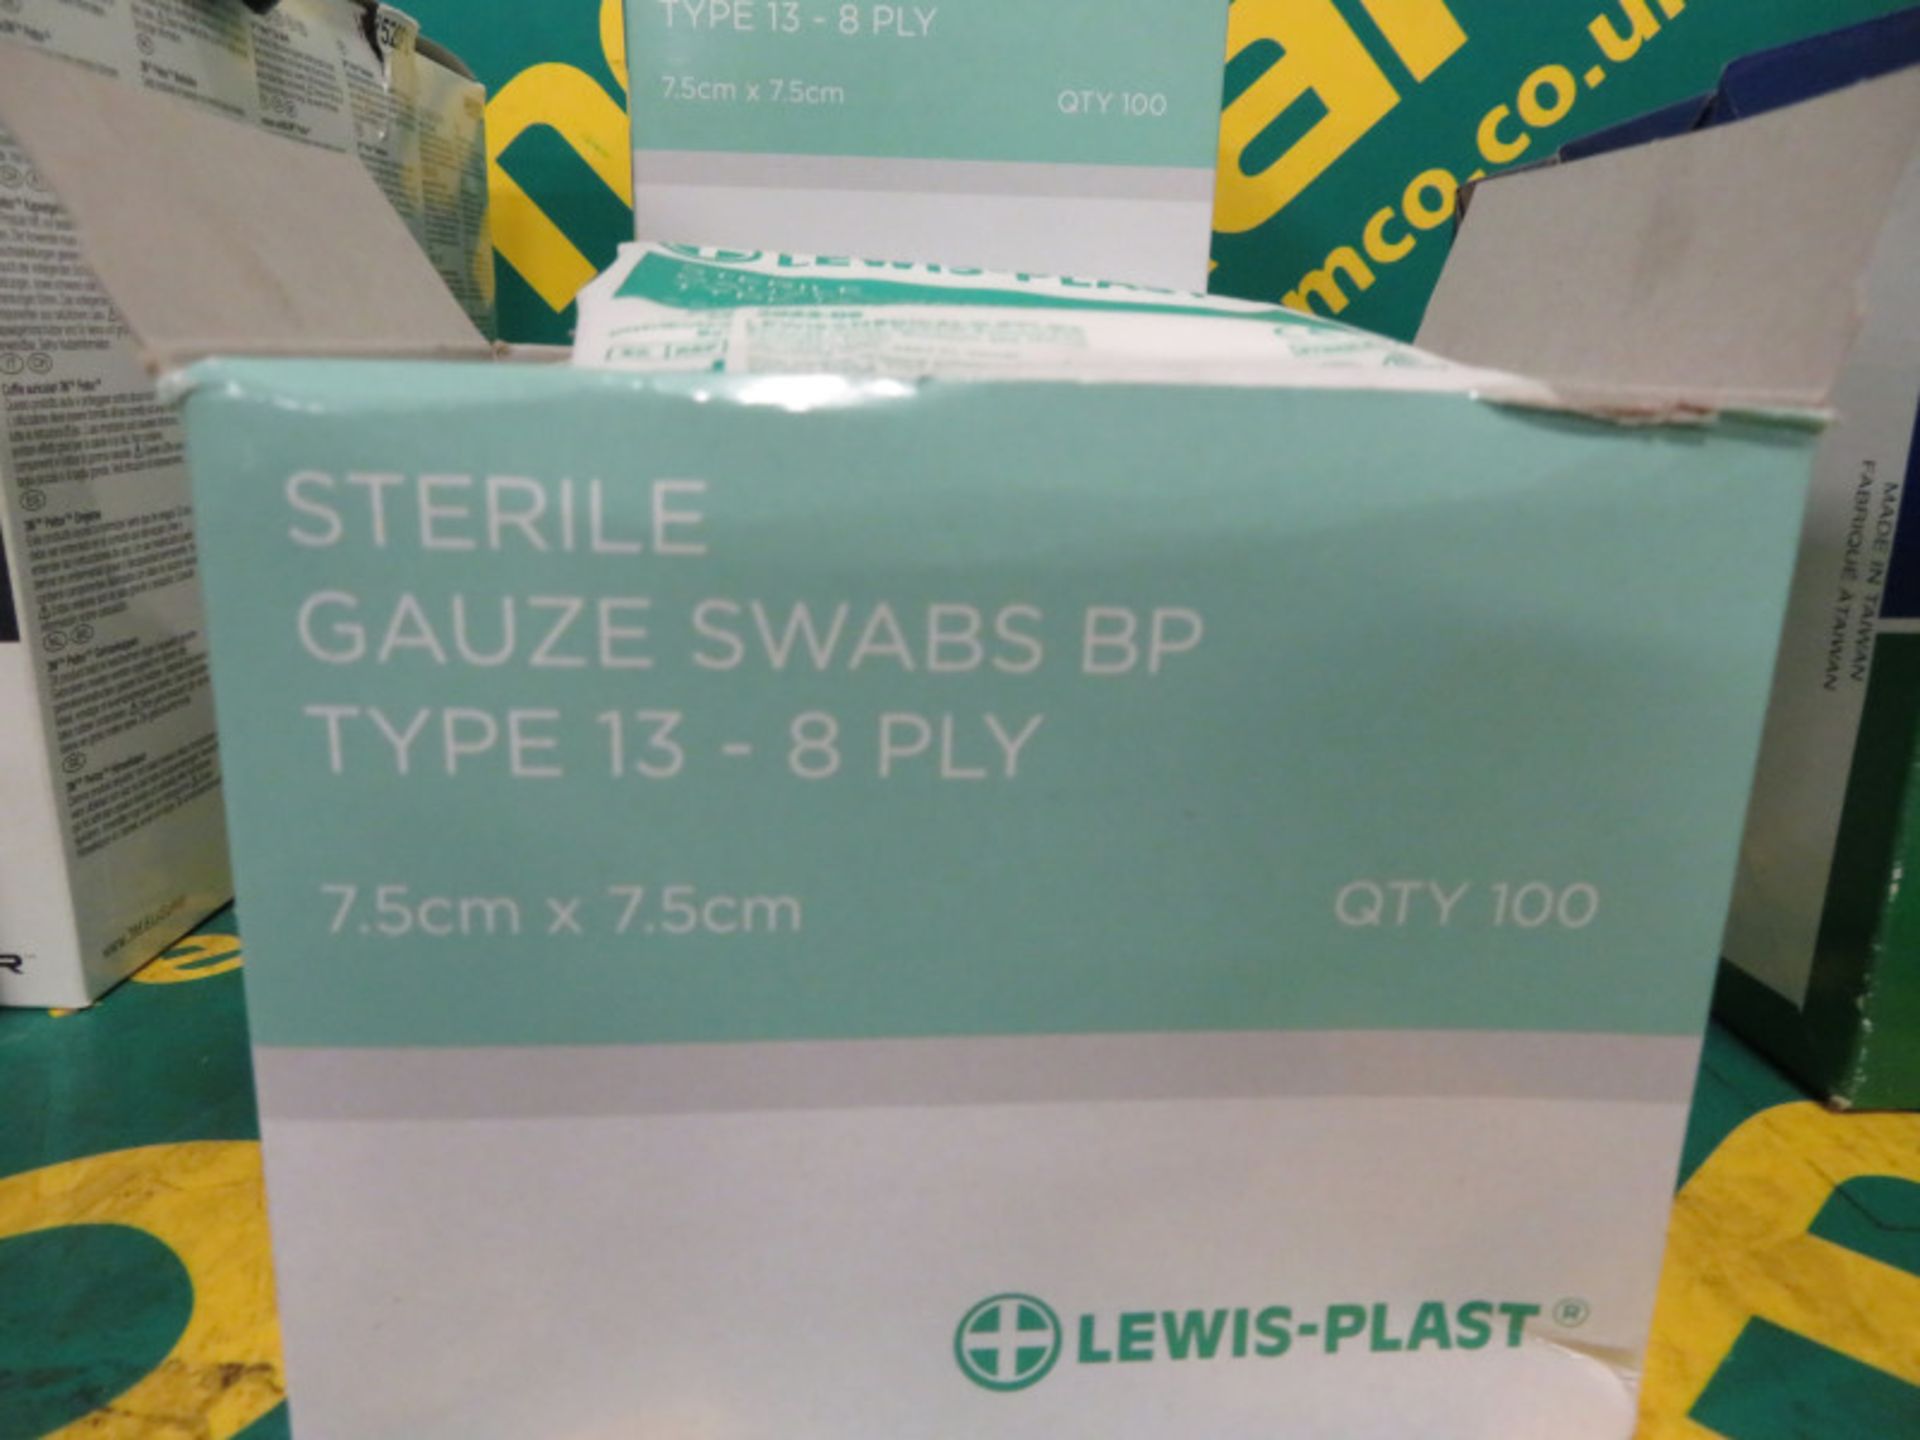 Lewis Plast strile gauze swabs BP type 13-8PLY - 7.5cm x 7.5cm - 100 per box - 6 boxes - Image 2 of 3